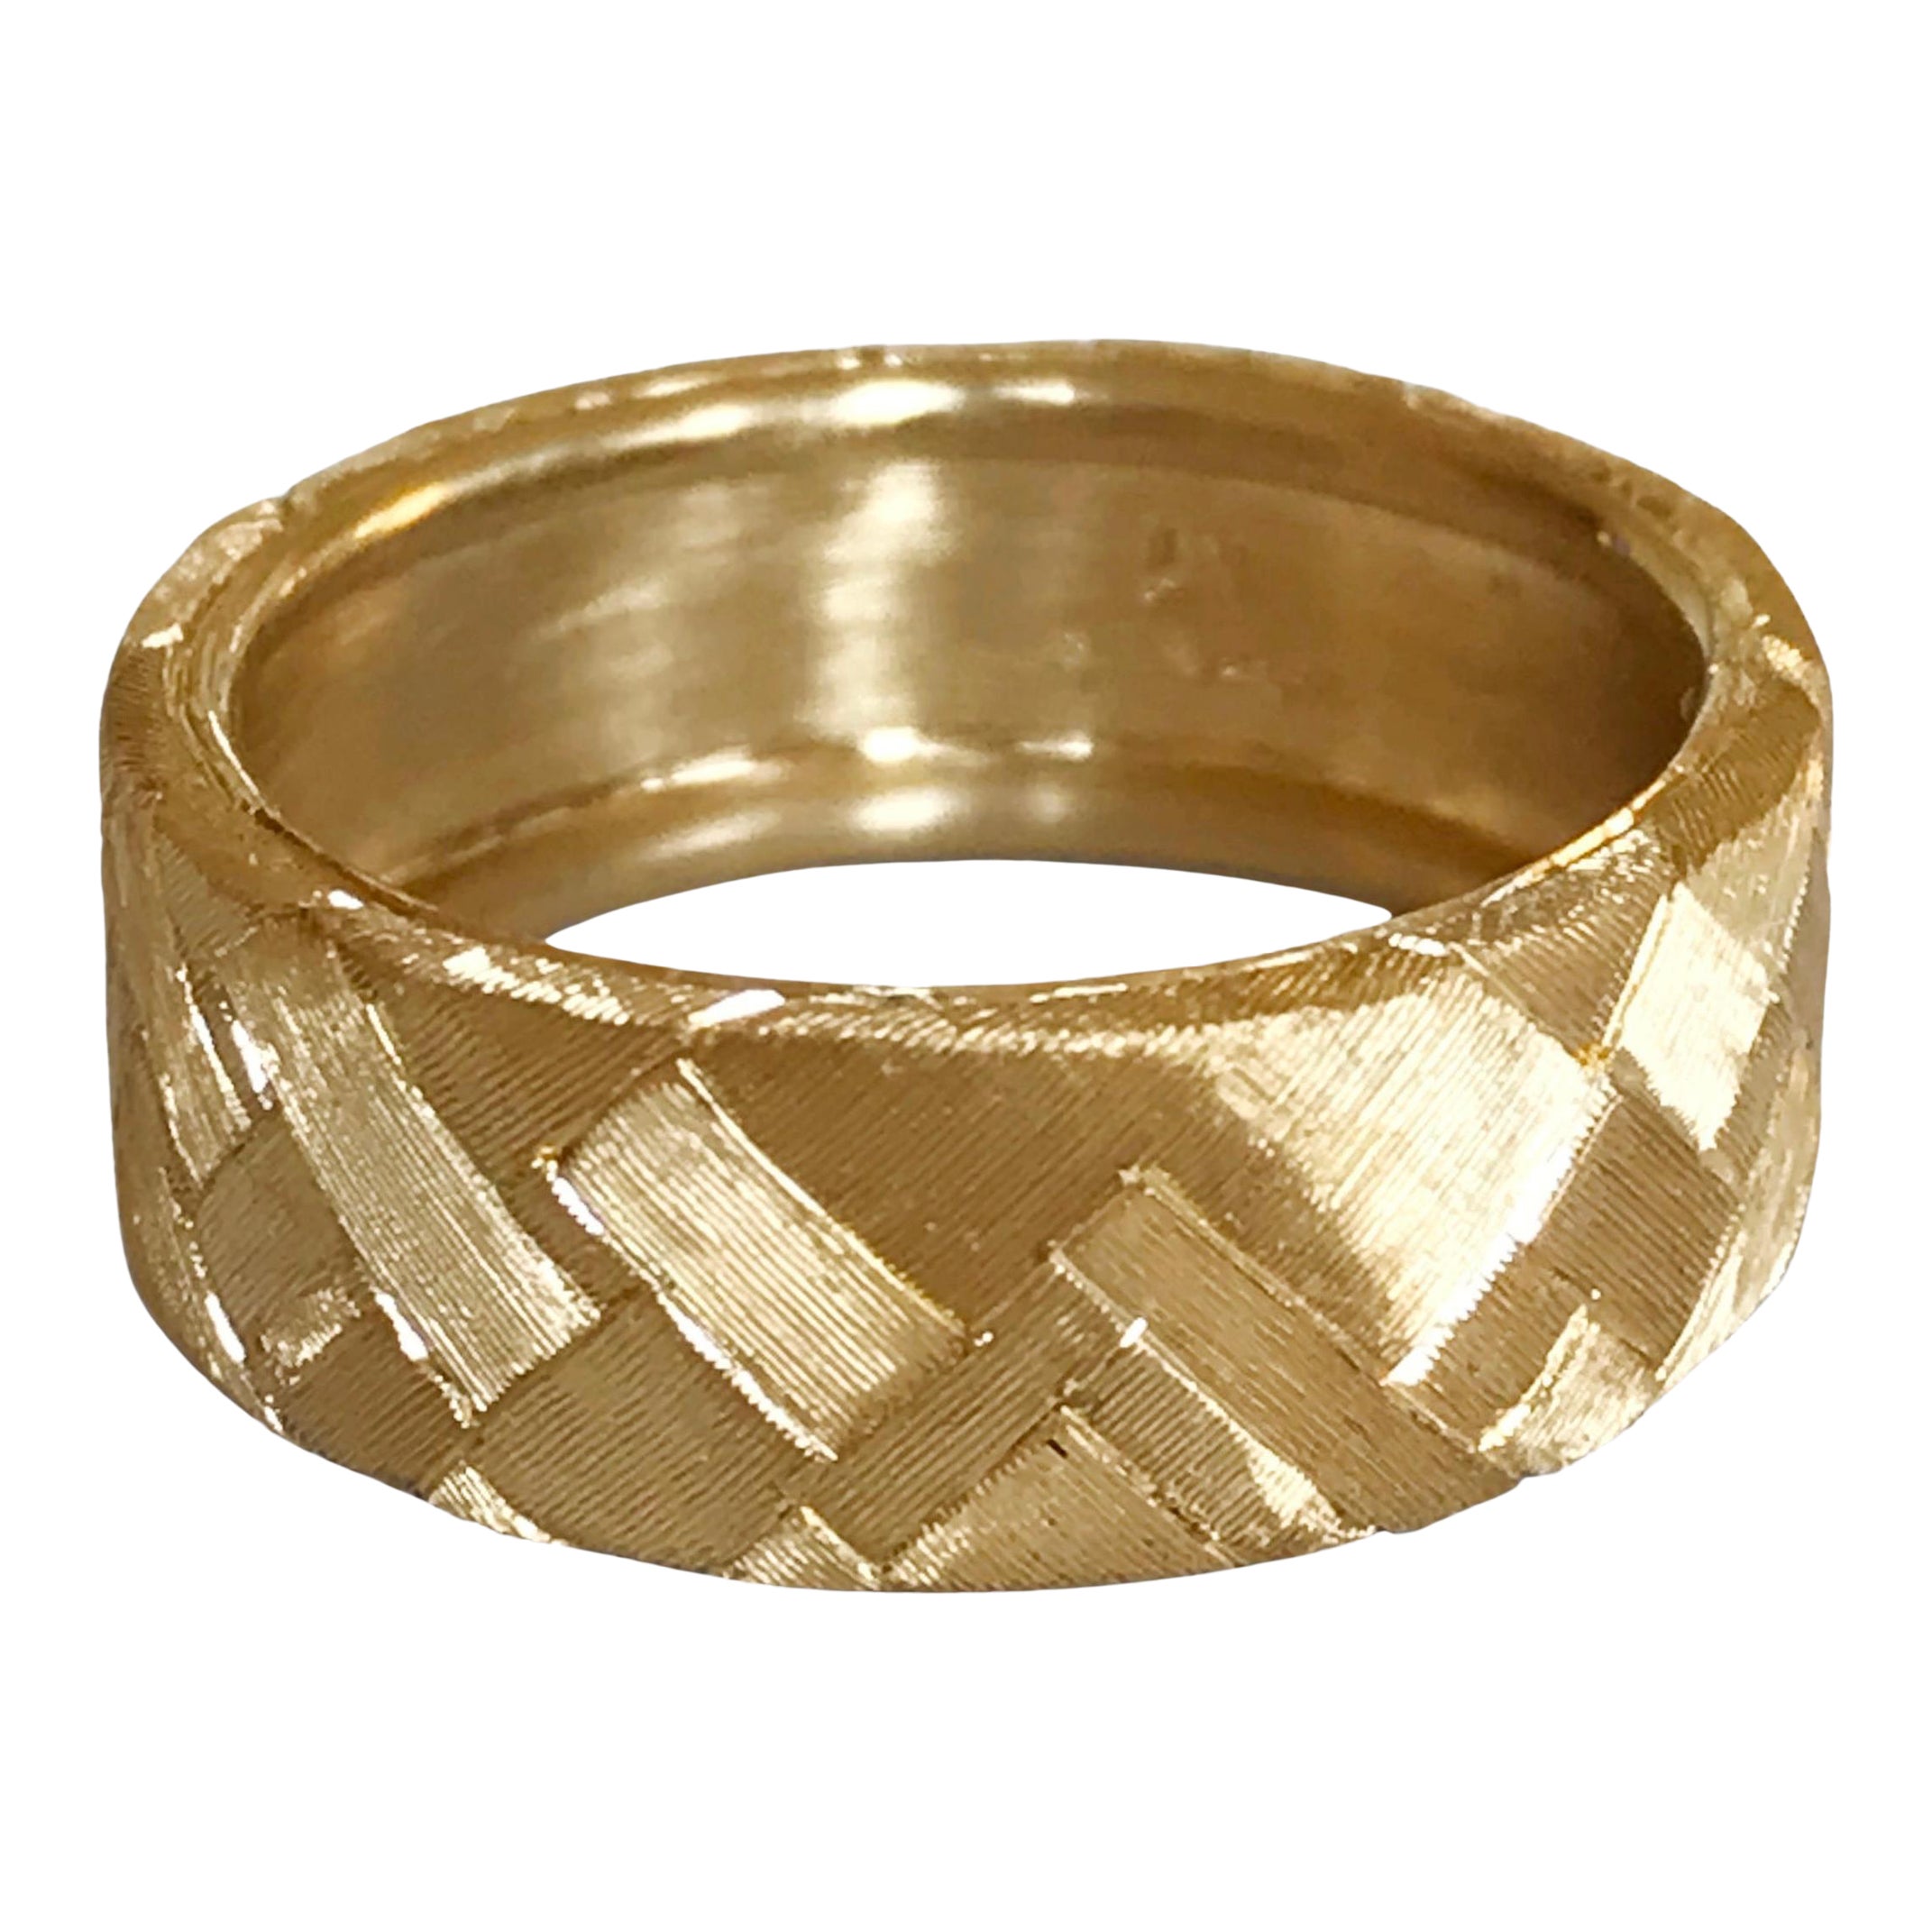 Dalben Hand Engraved Gold Band Ring